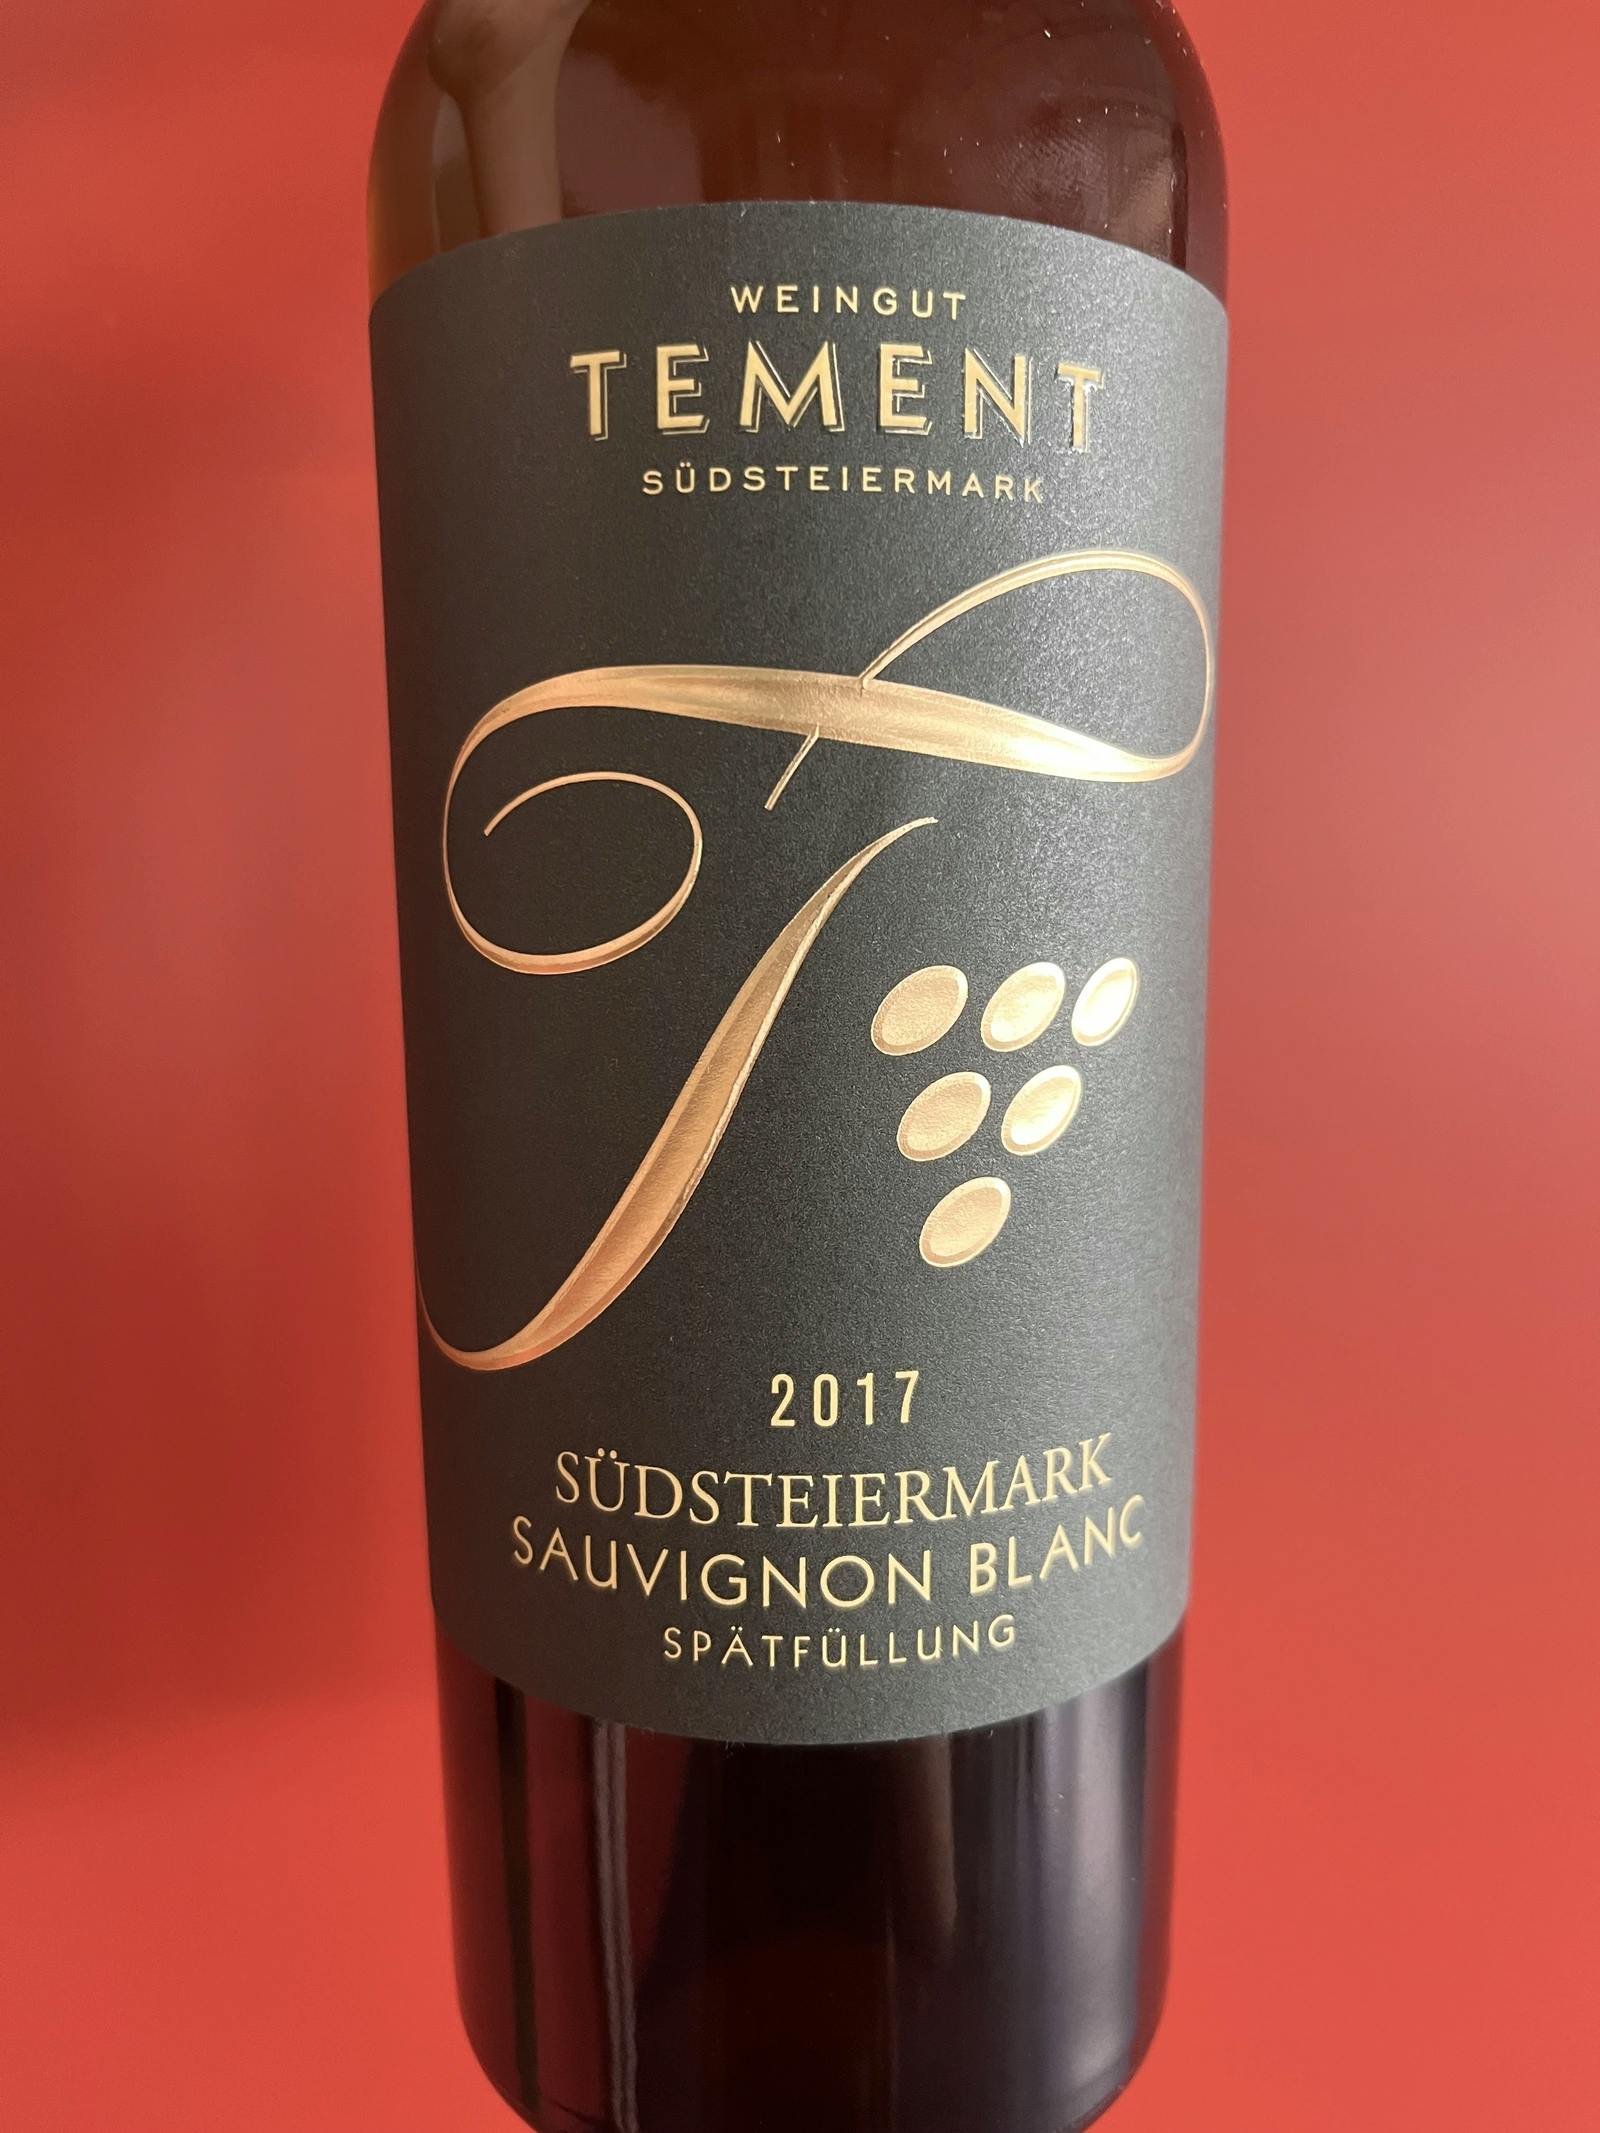 Weingut Tement Sauvignon Blanc Südsteiermark Spätfüllung 2017